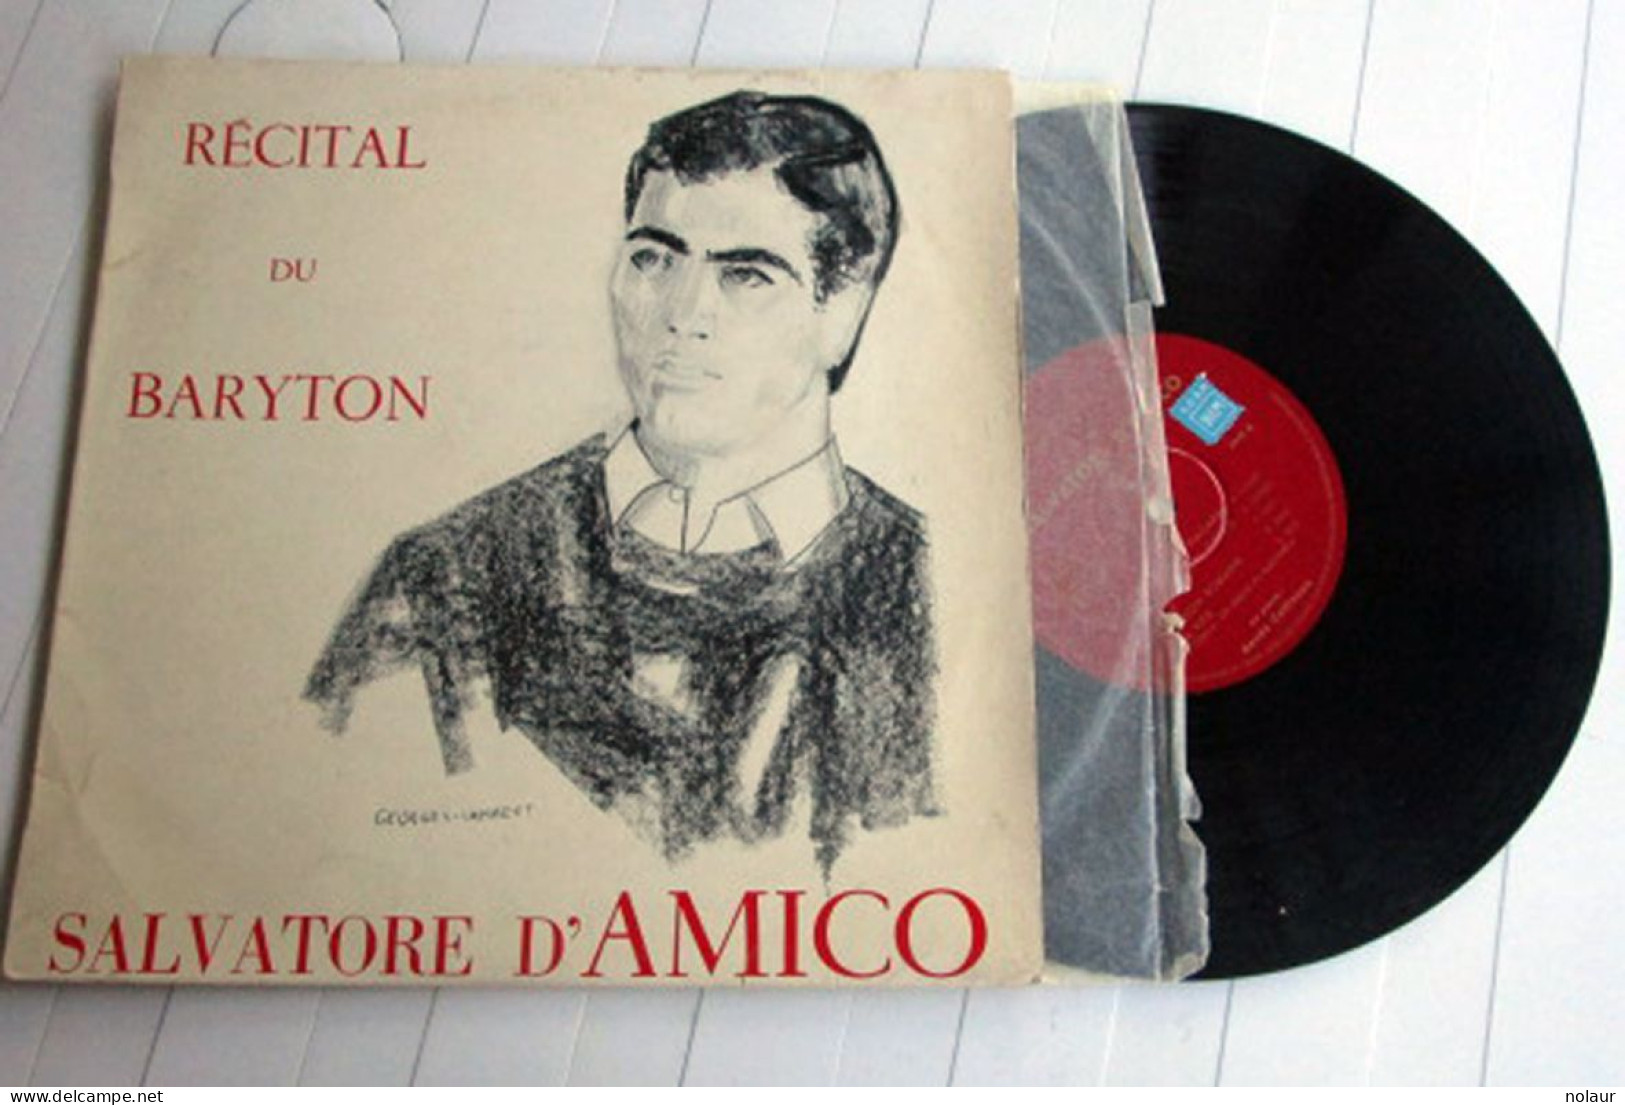 Récital Du Baryton Salvatore D'Amico - Opera